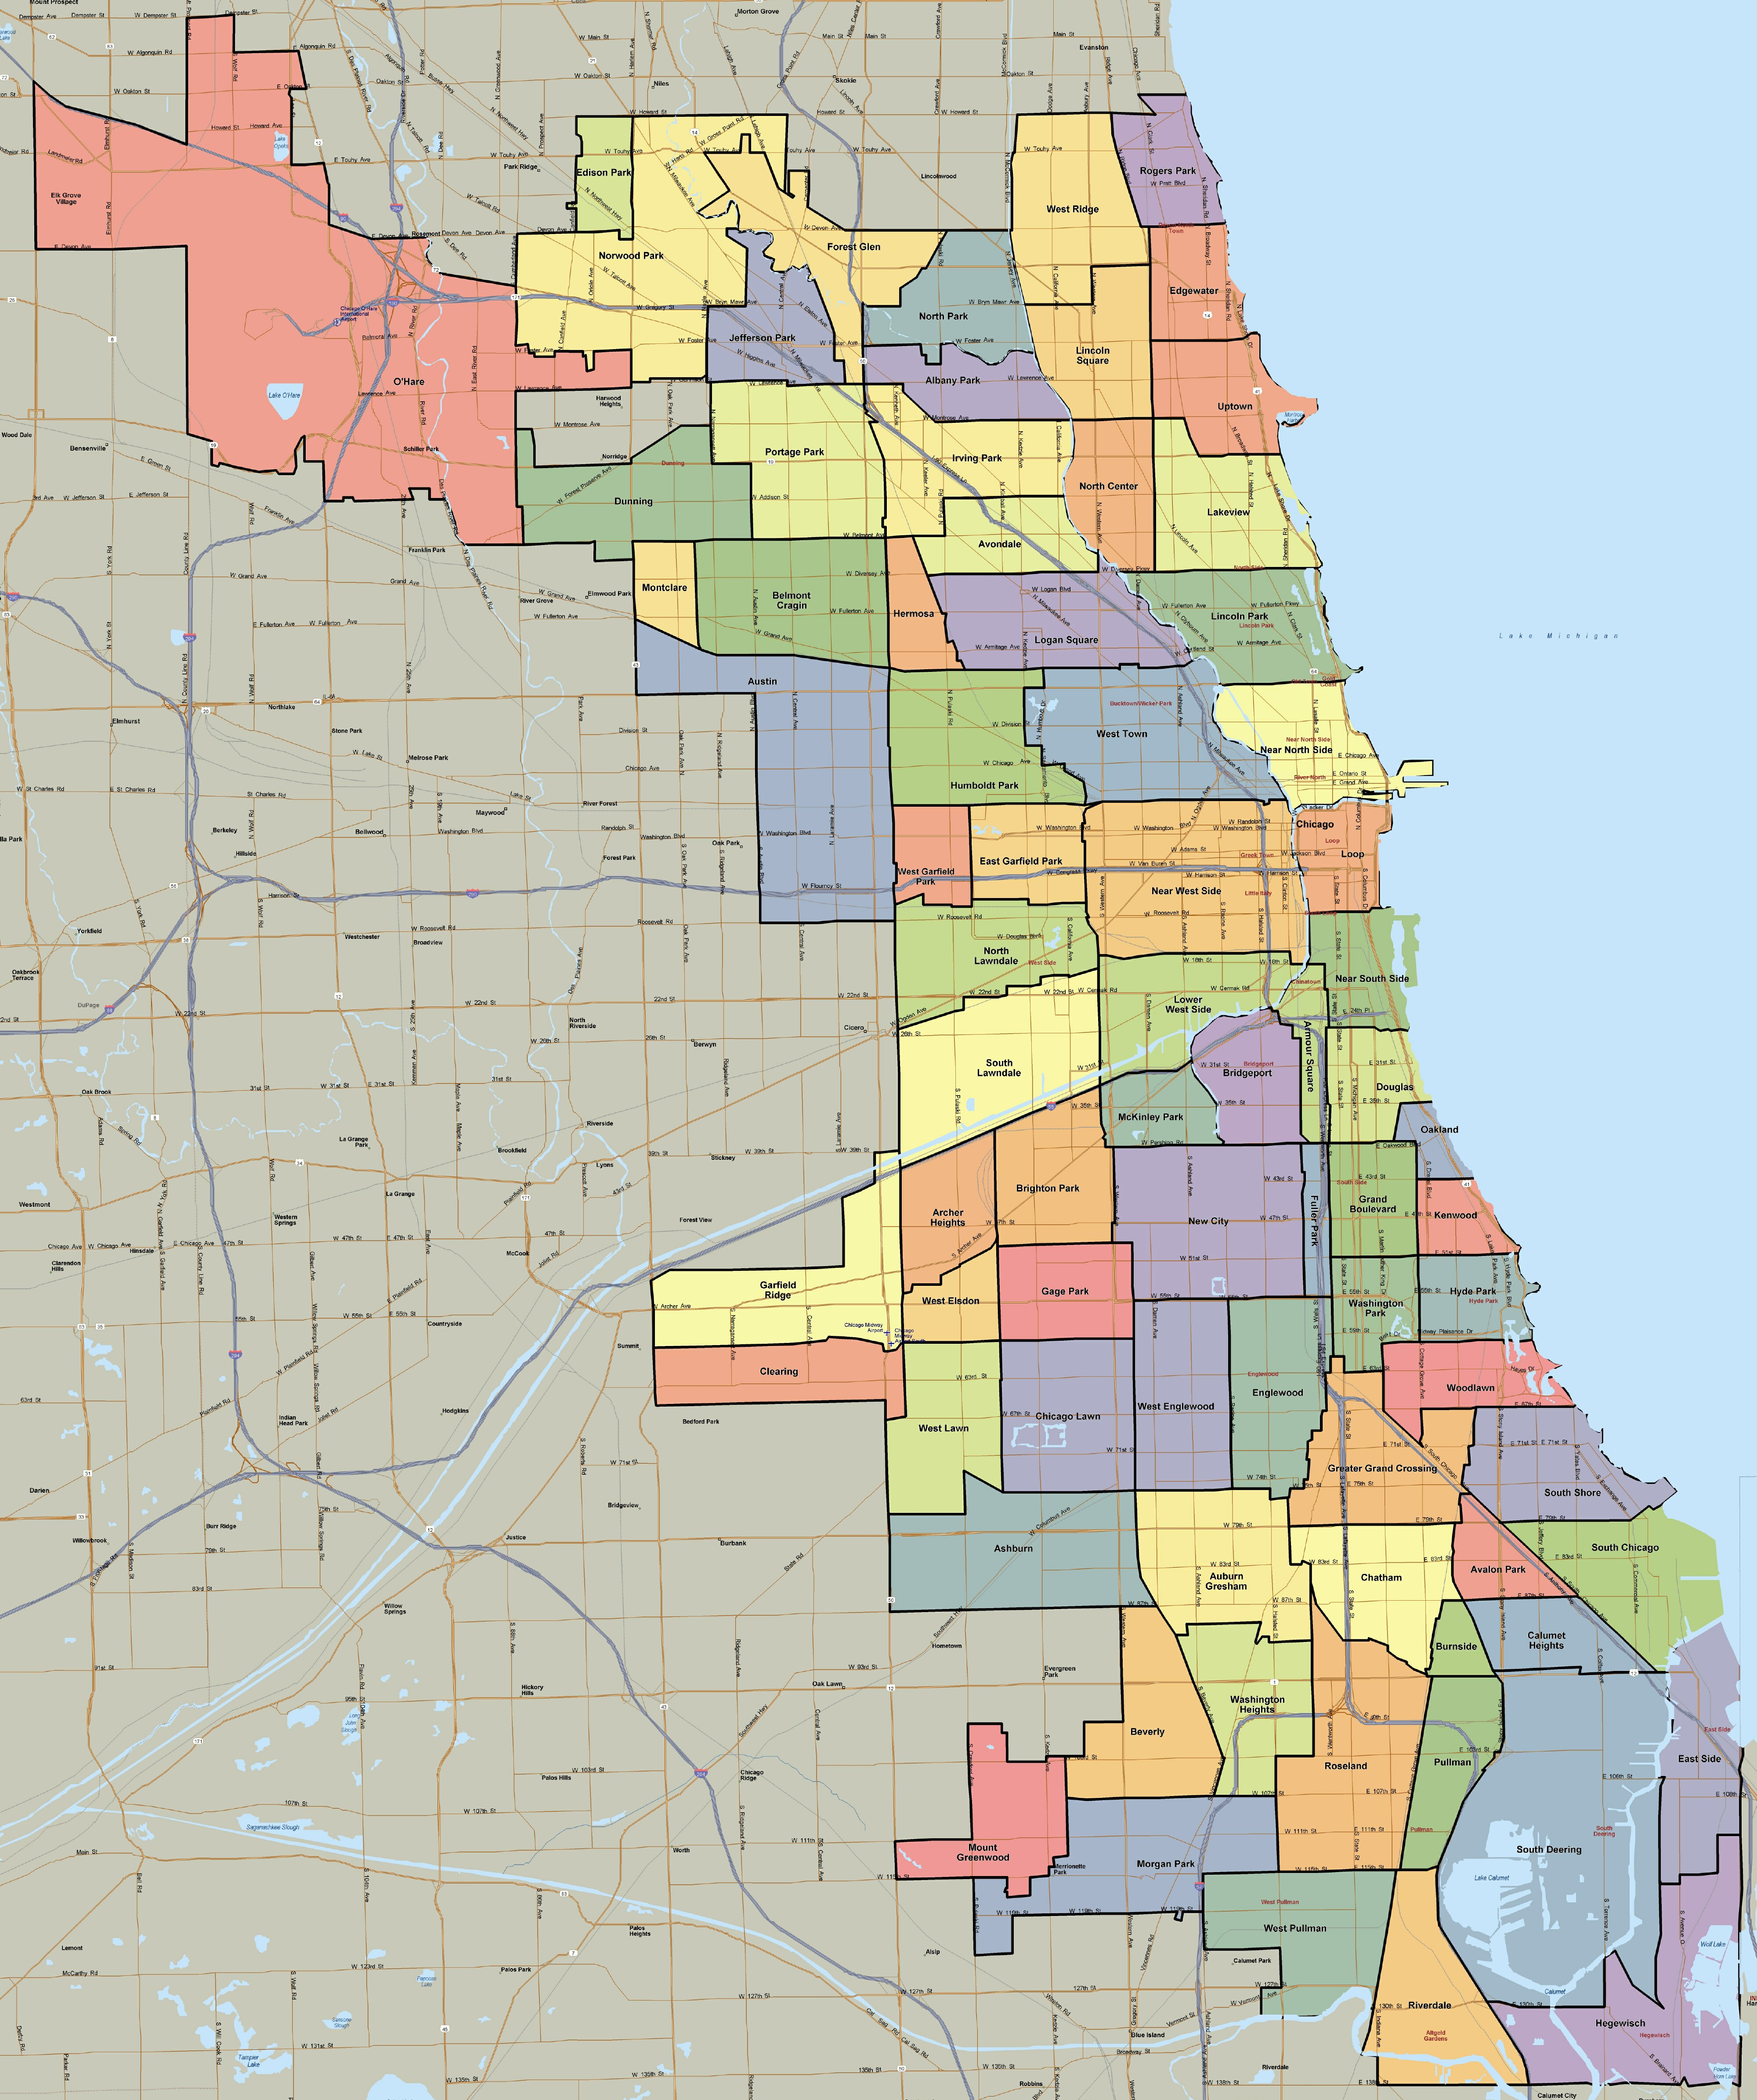 Chicago neighborhood maps, profiles, real estate market trends